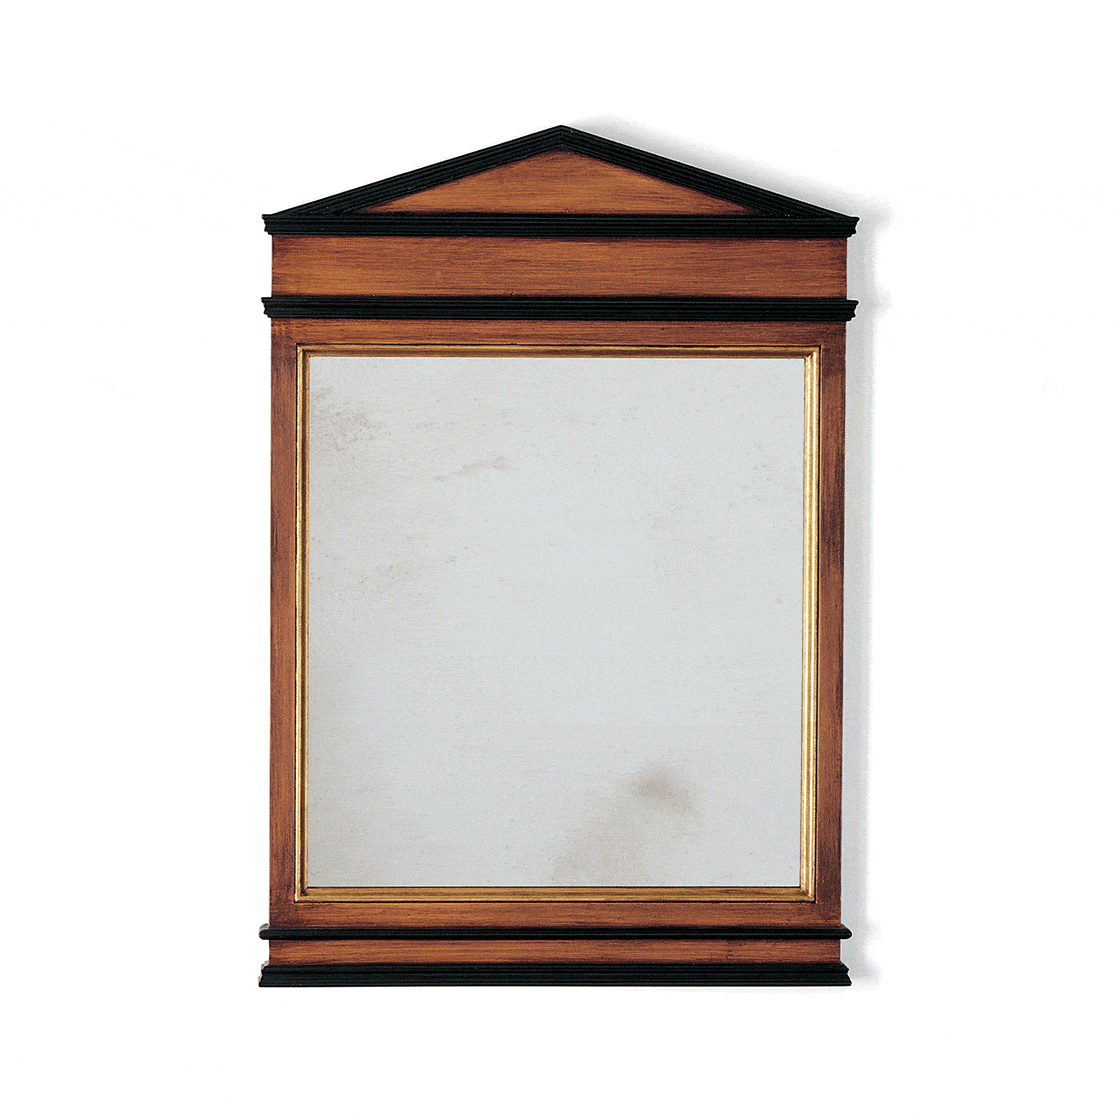 Neoclassical mirror in Cherry, ebony & gold - Beaumont & Fletcher